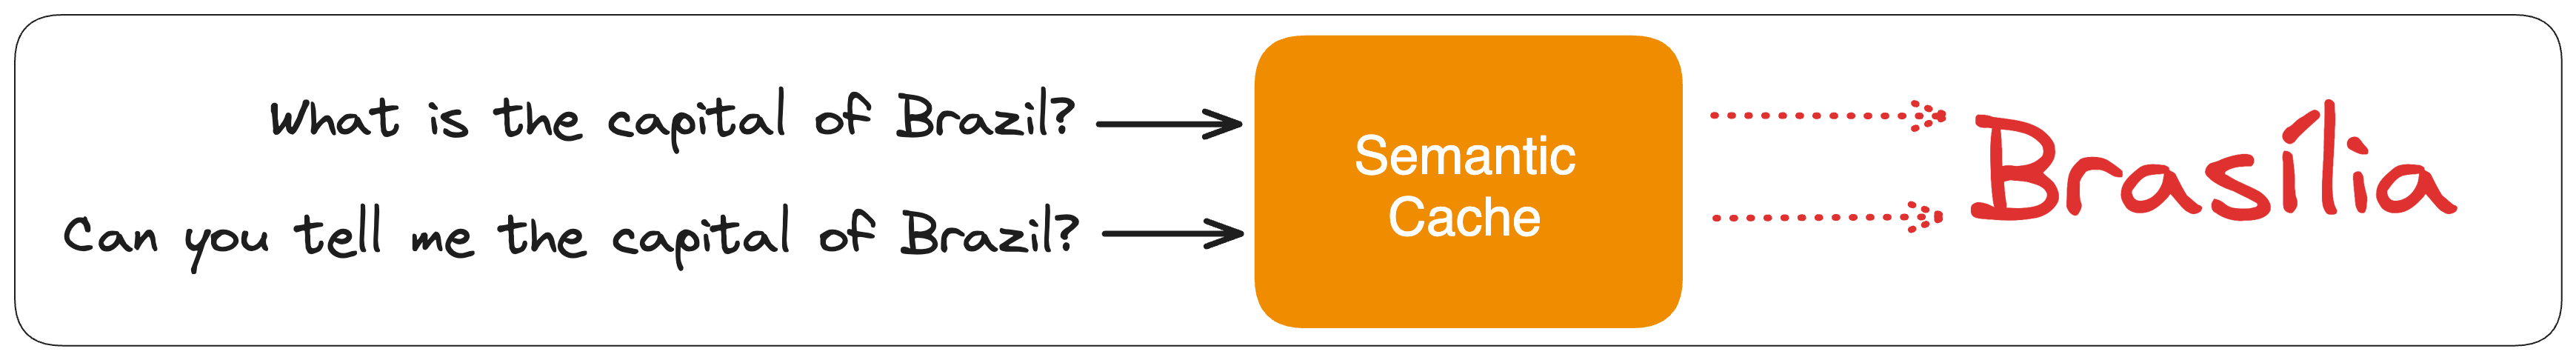 semantic-cache-question